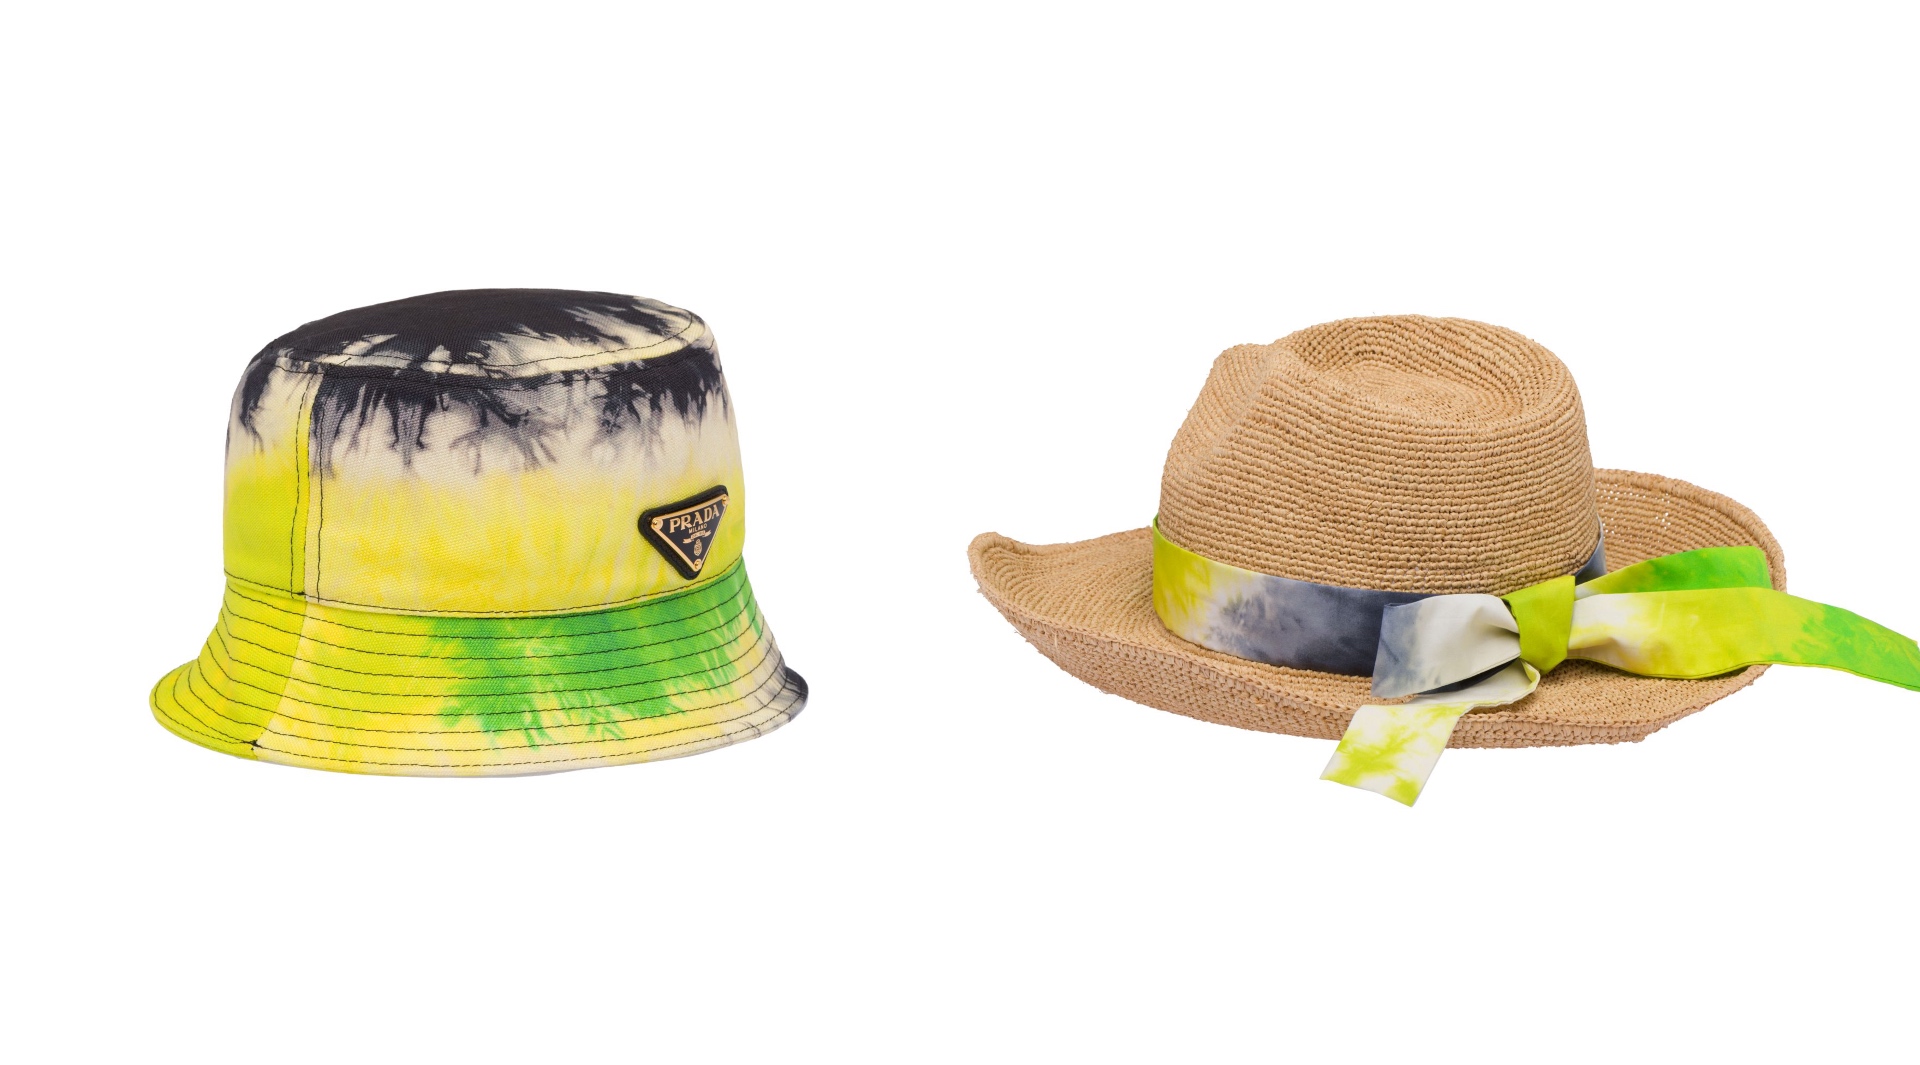 Prada tie dye raffia hat with bow and canvas bucket hat